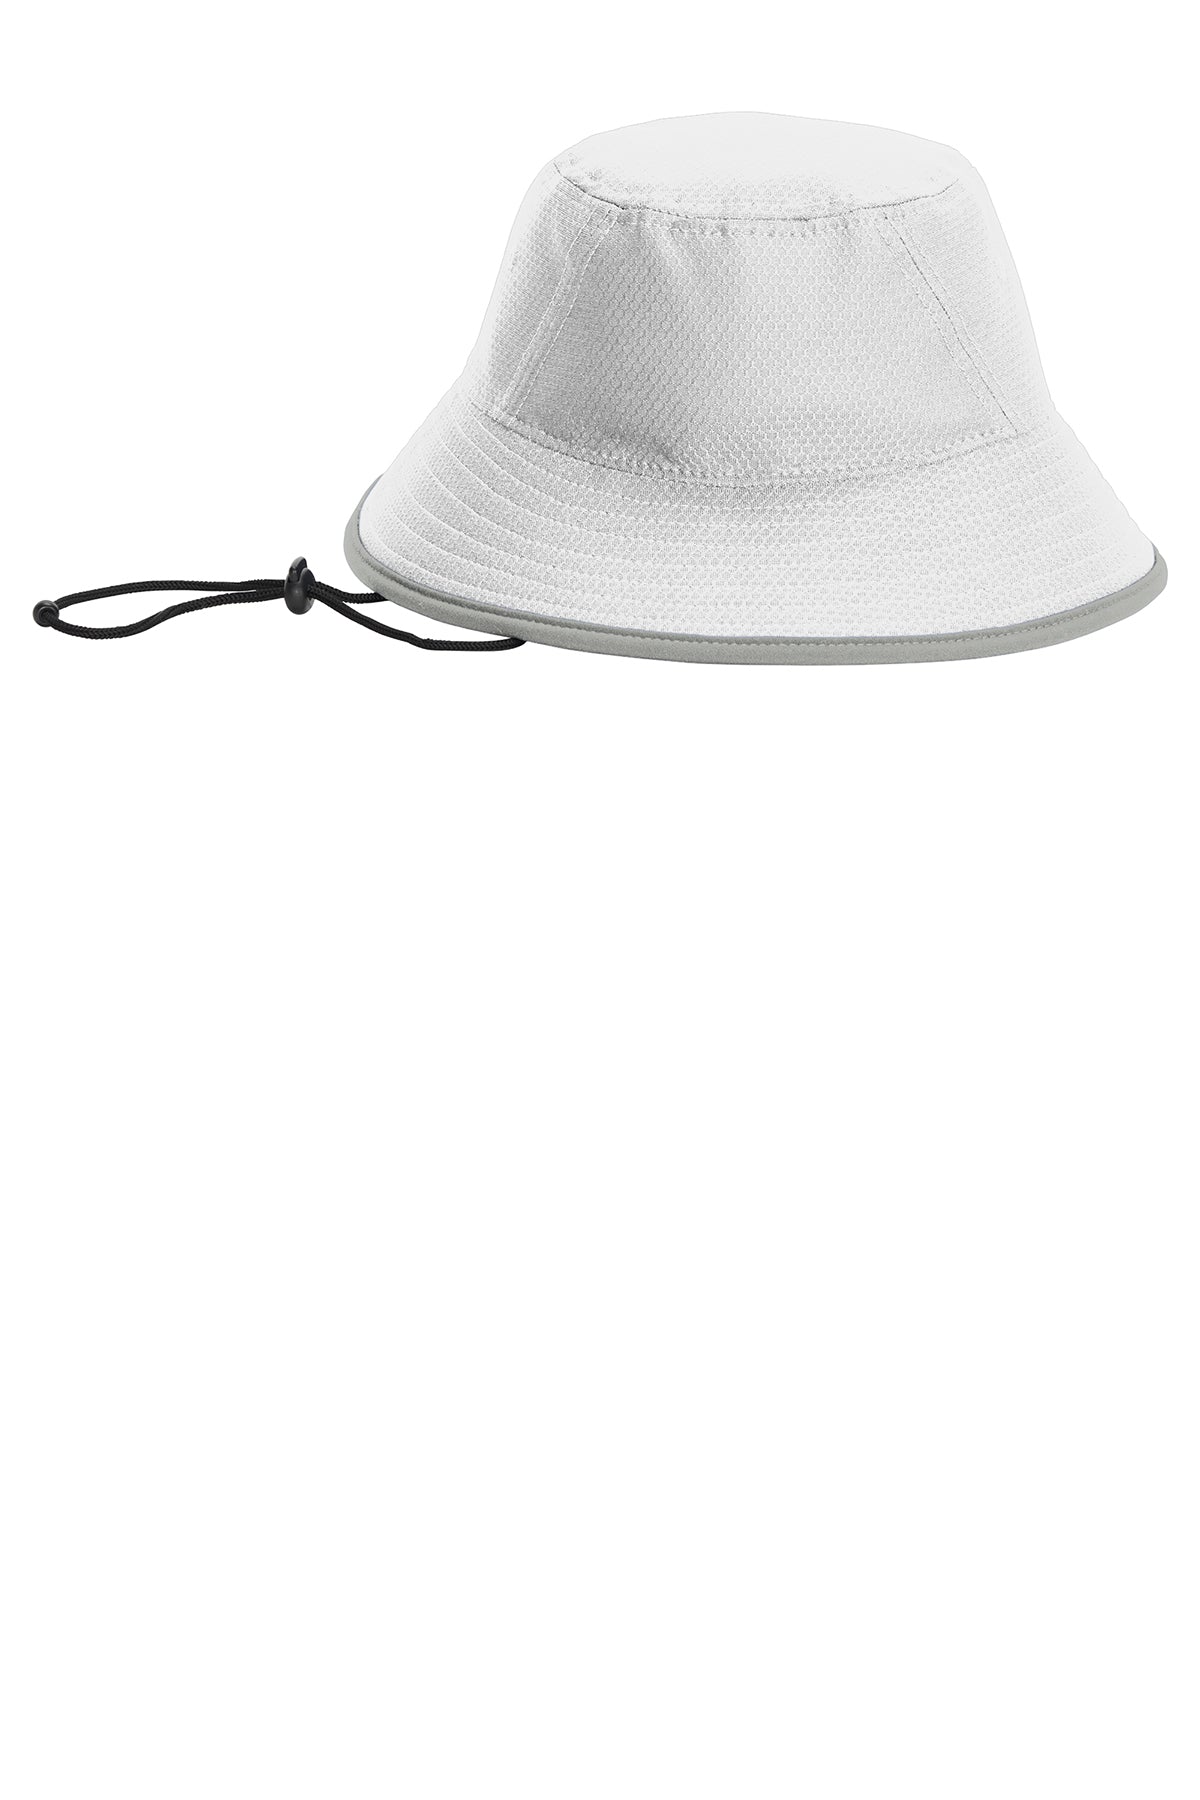 New Era Hex Era Branded Bucket Hats, White Rainstorm Grey